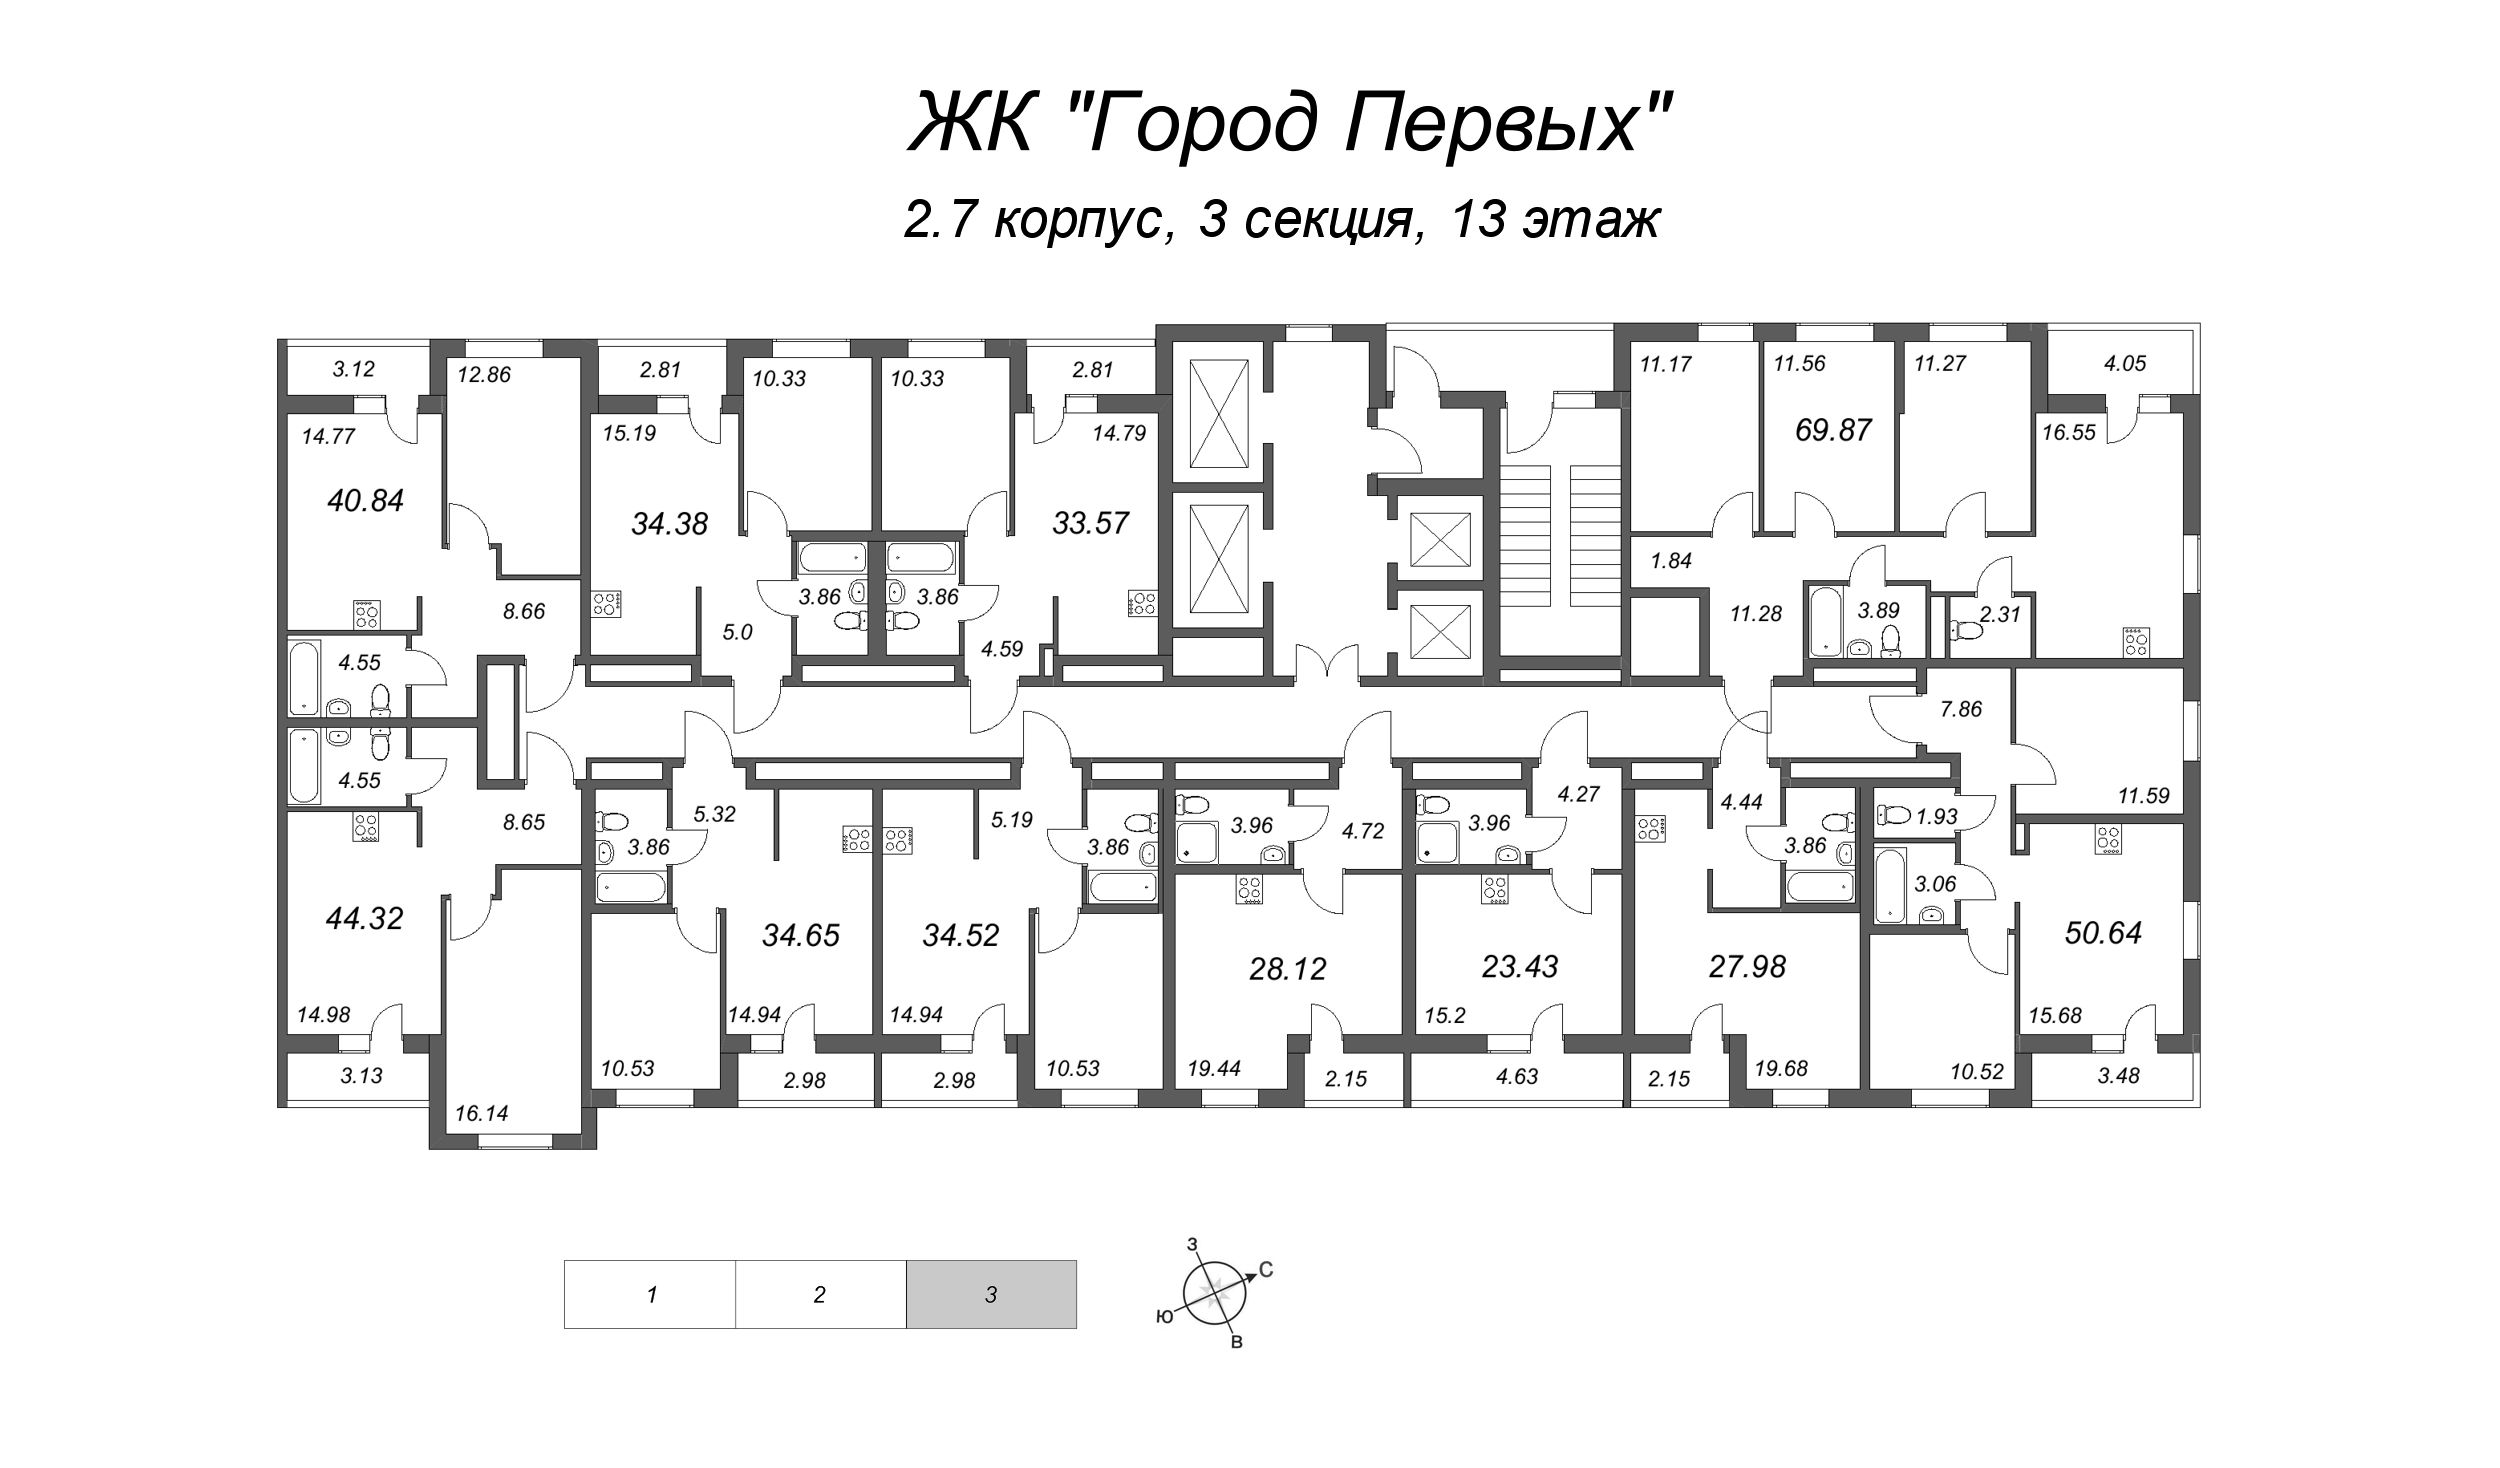 4-комнатная (Евро) квартира, 69.87 м² - планировка этажа